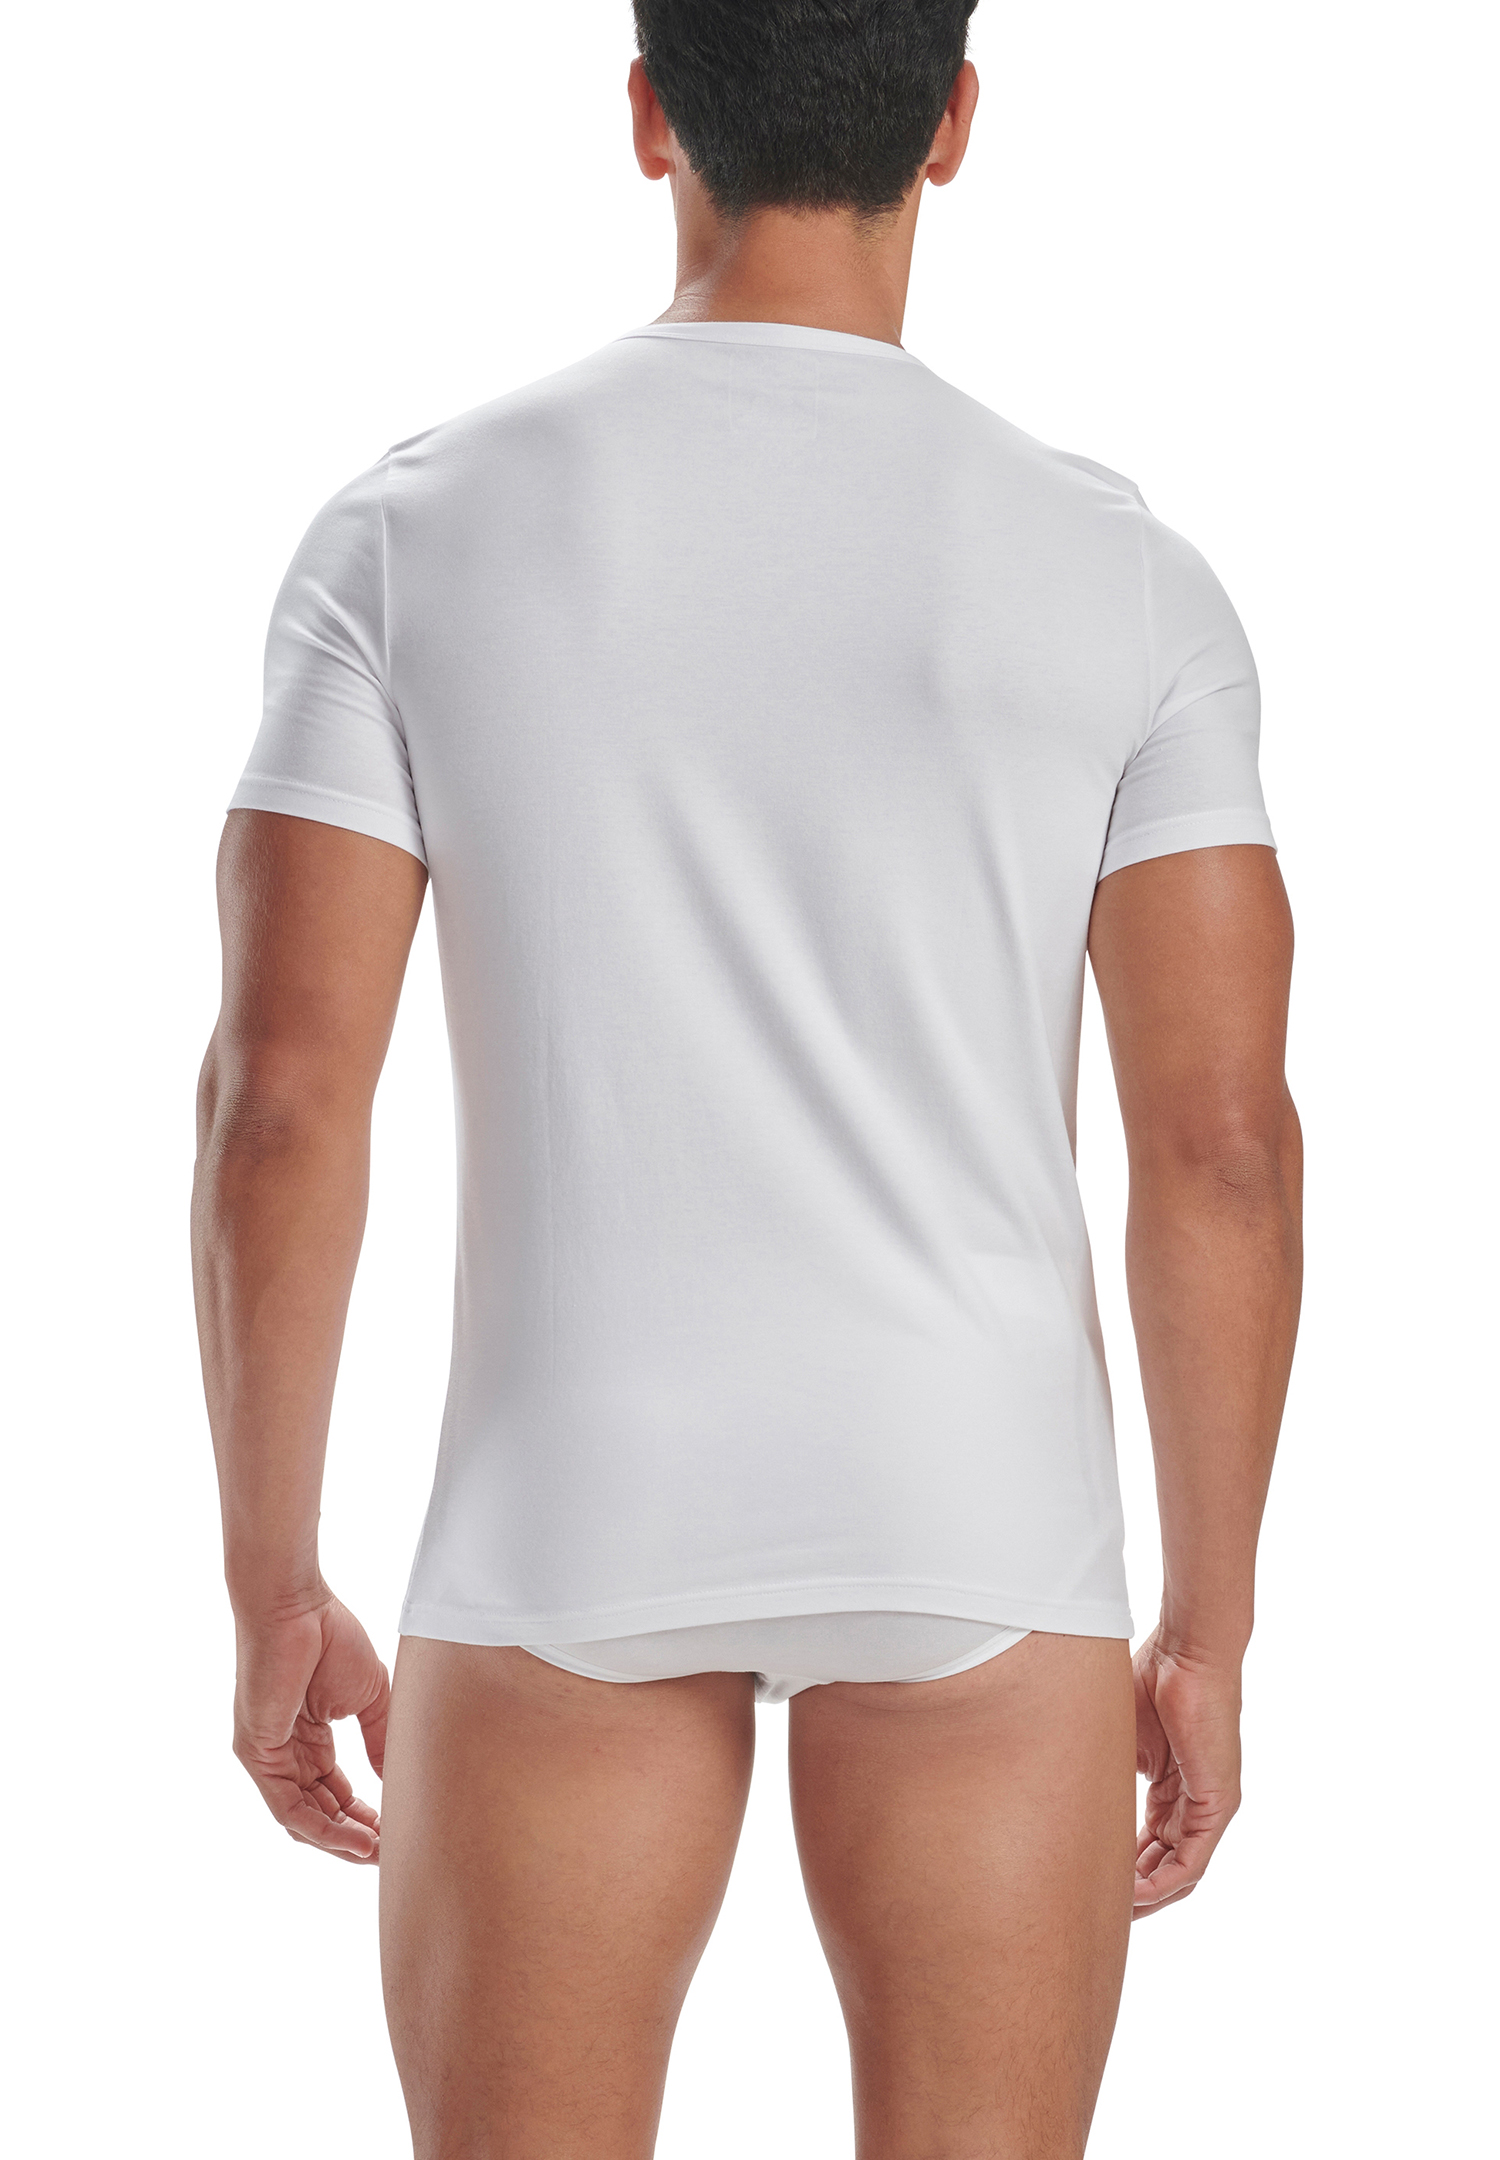 3 er Pack adidas Crew Neck T-Shirt Herren Unterhemd Rund Ausschnitt Baumwolle langlebig